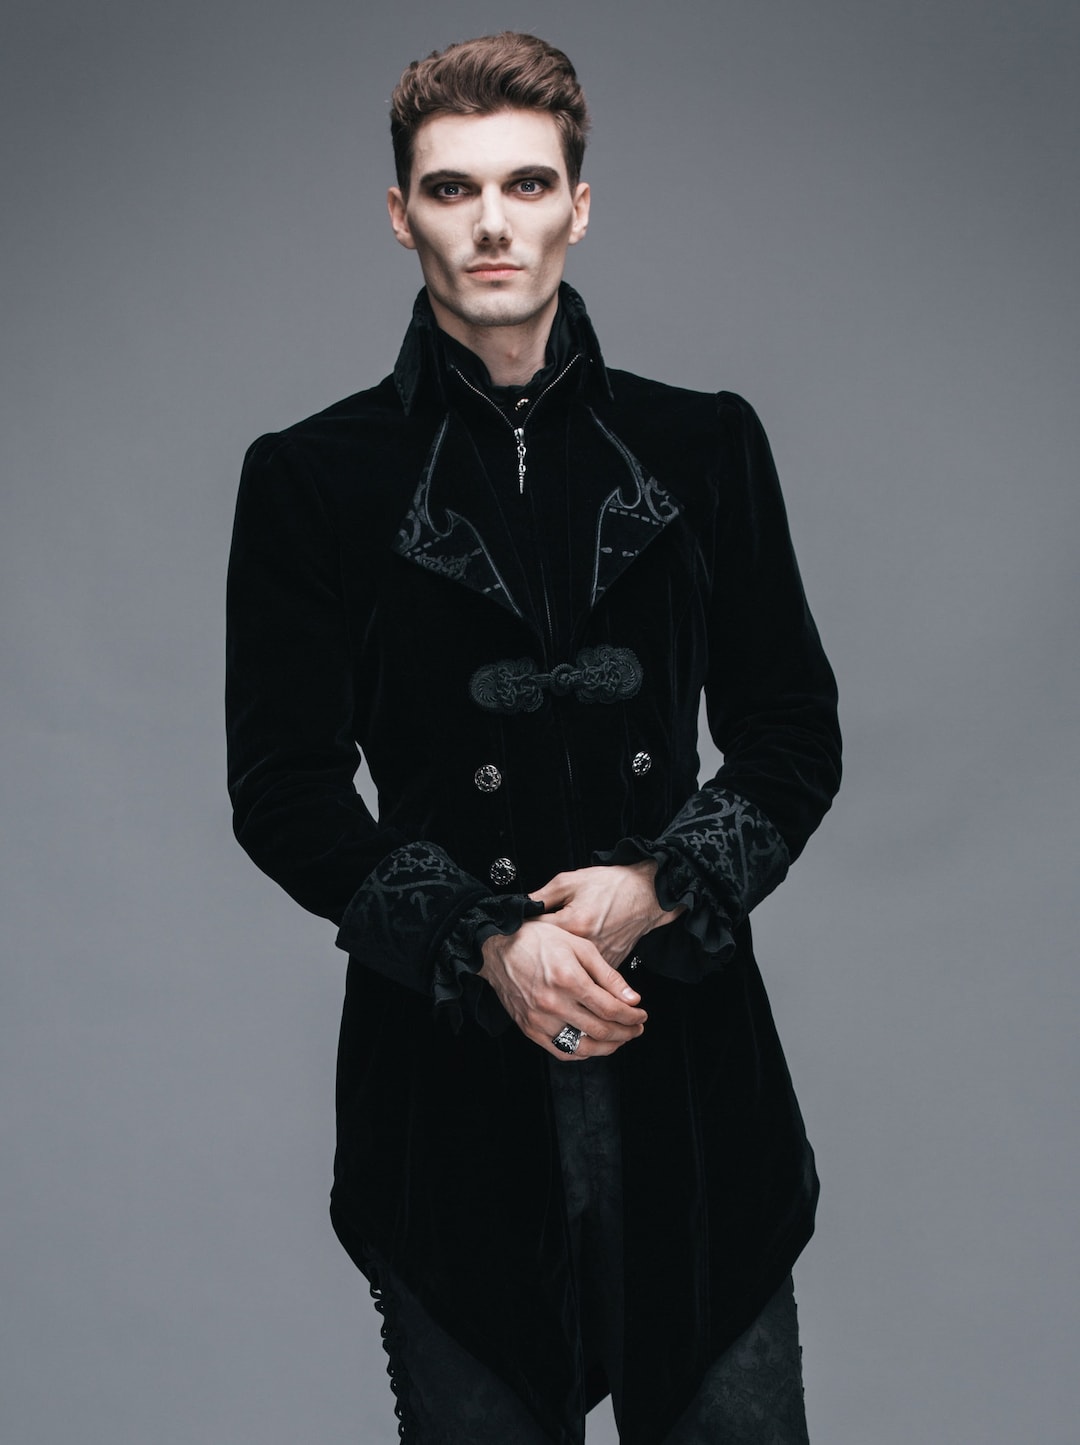 Victorian Tail Coat Black Tuxedo for Men Men Long Jacket - Etsy